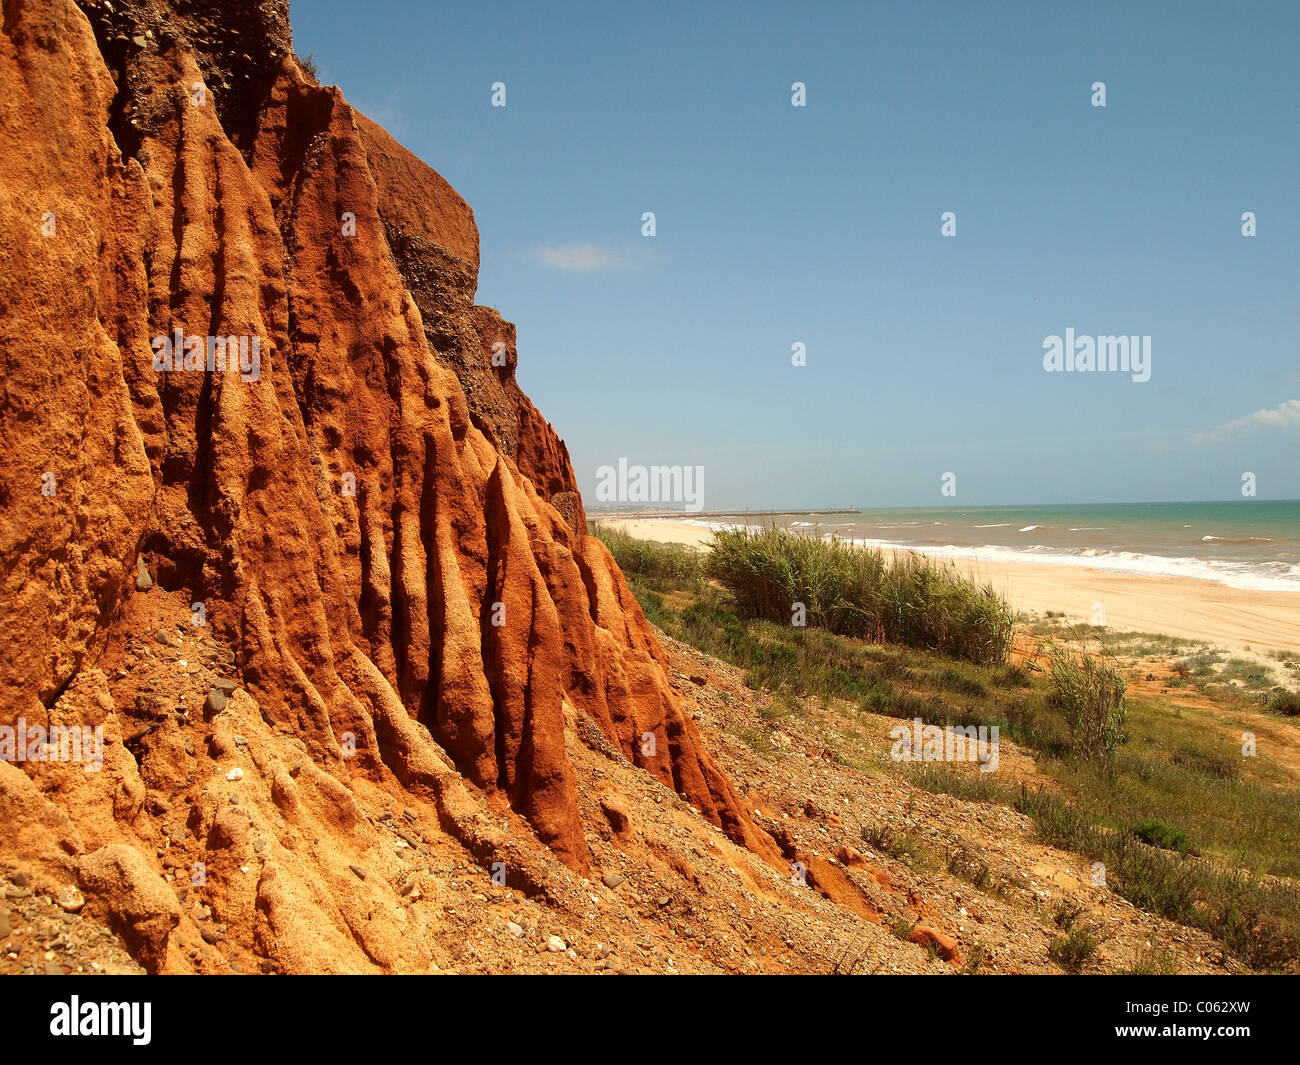 Cliffs and beach at Praia da Falesia near Vilamoura, Algarve, Portugal, Europe Stock Photo